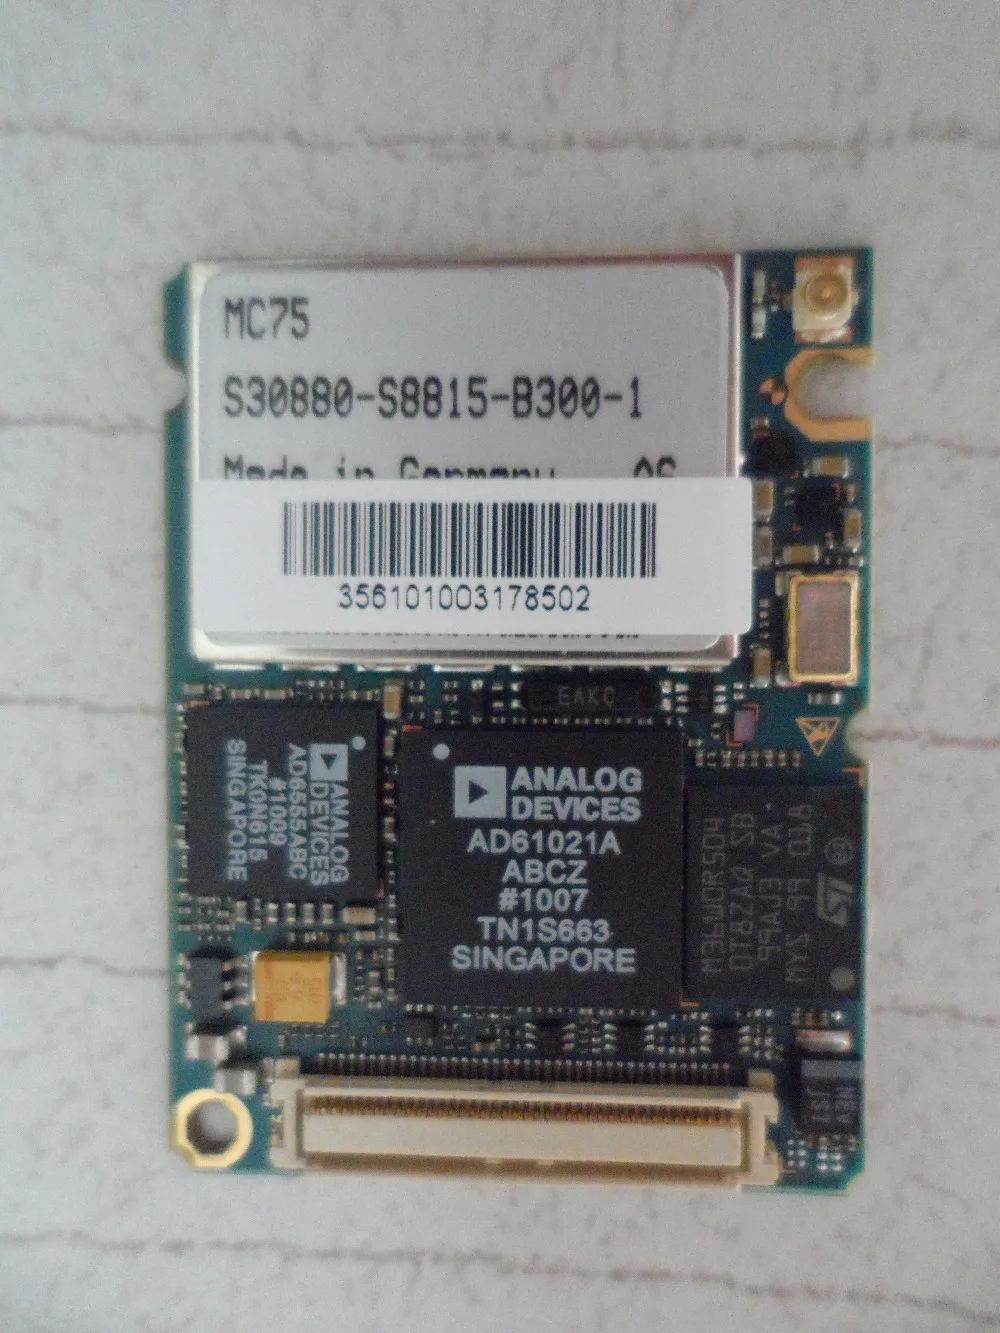 

3pcs/Lot MC75 S30880-S8815-B300-1 INDUSTRIAL GPRS EDGE GSM RADIO MODULE